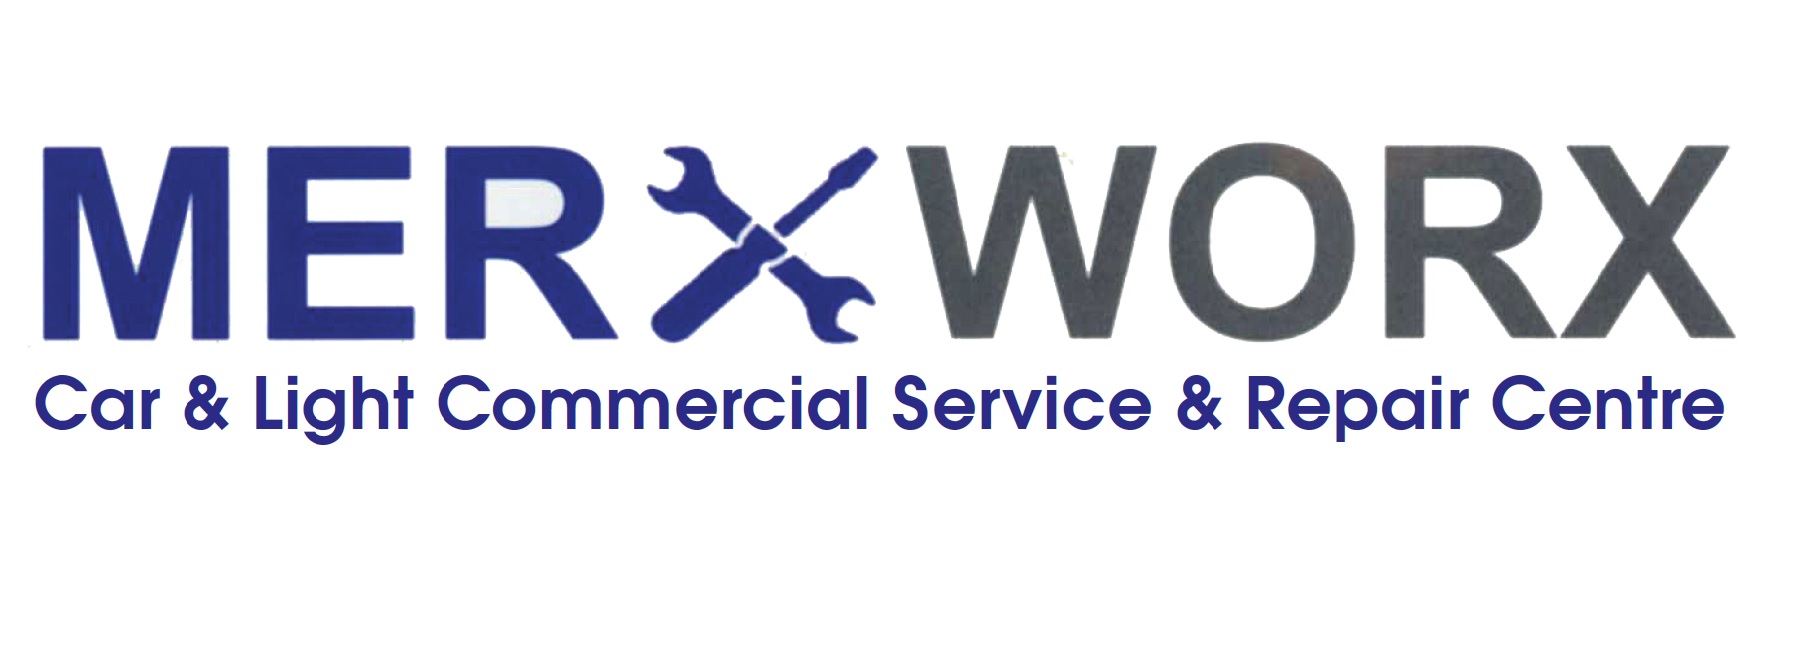 Merxworx Logo